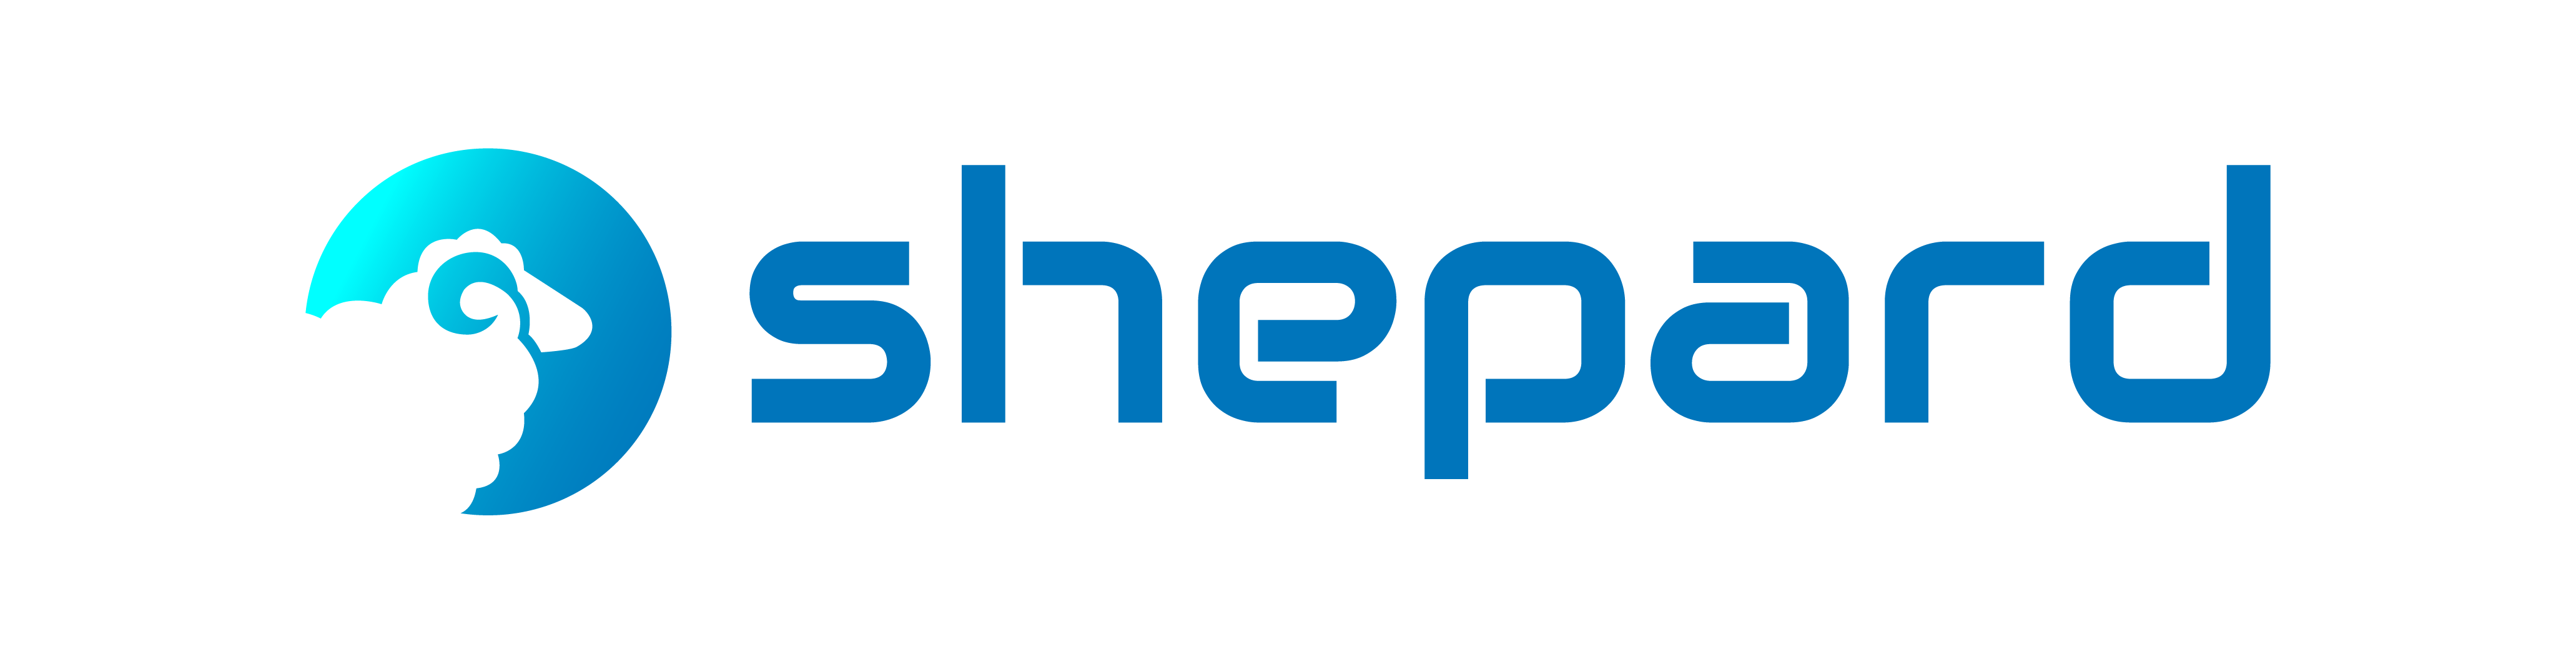 Logo of shepard